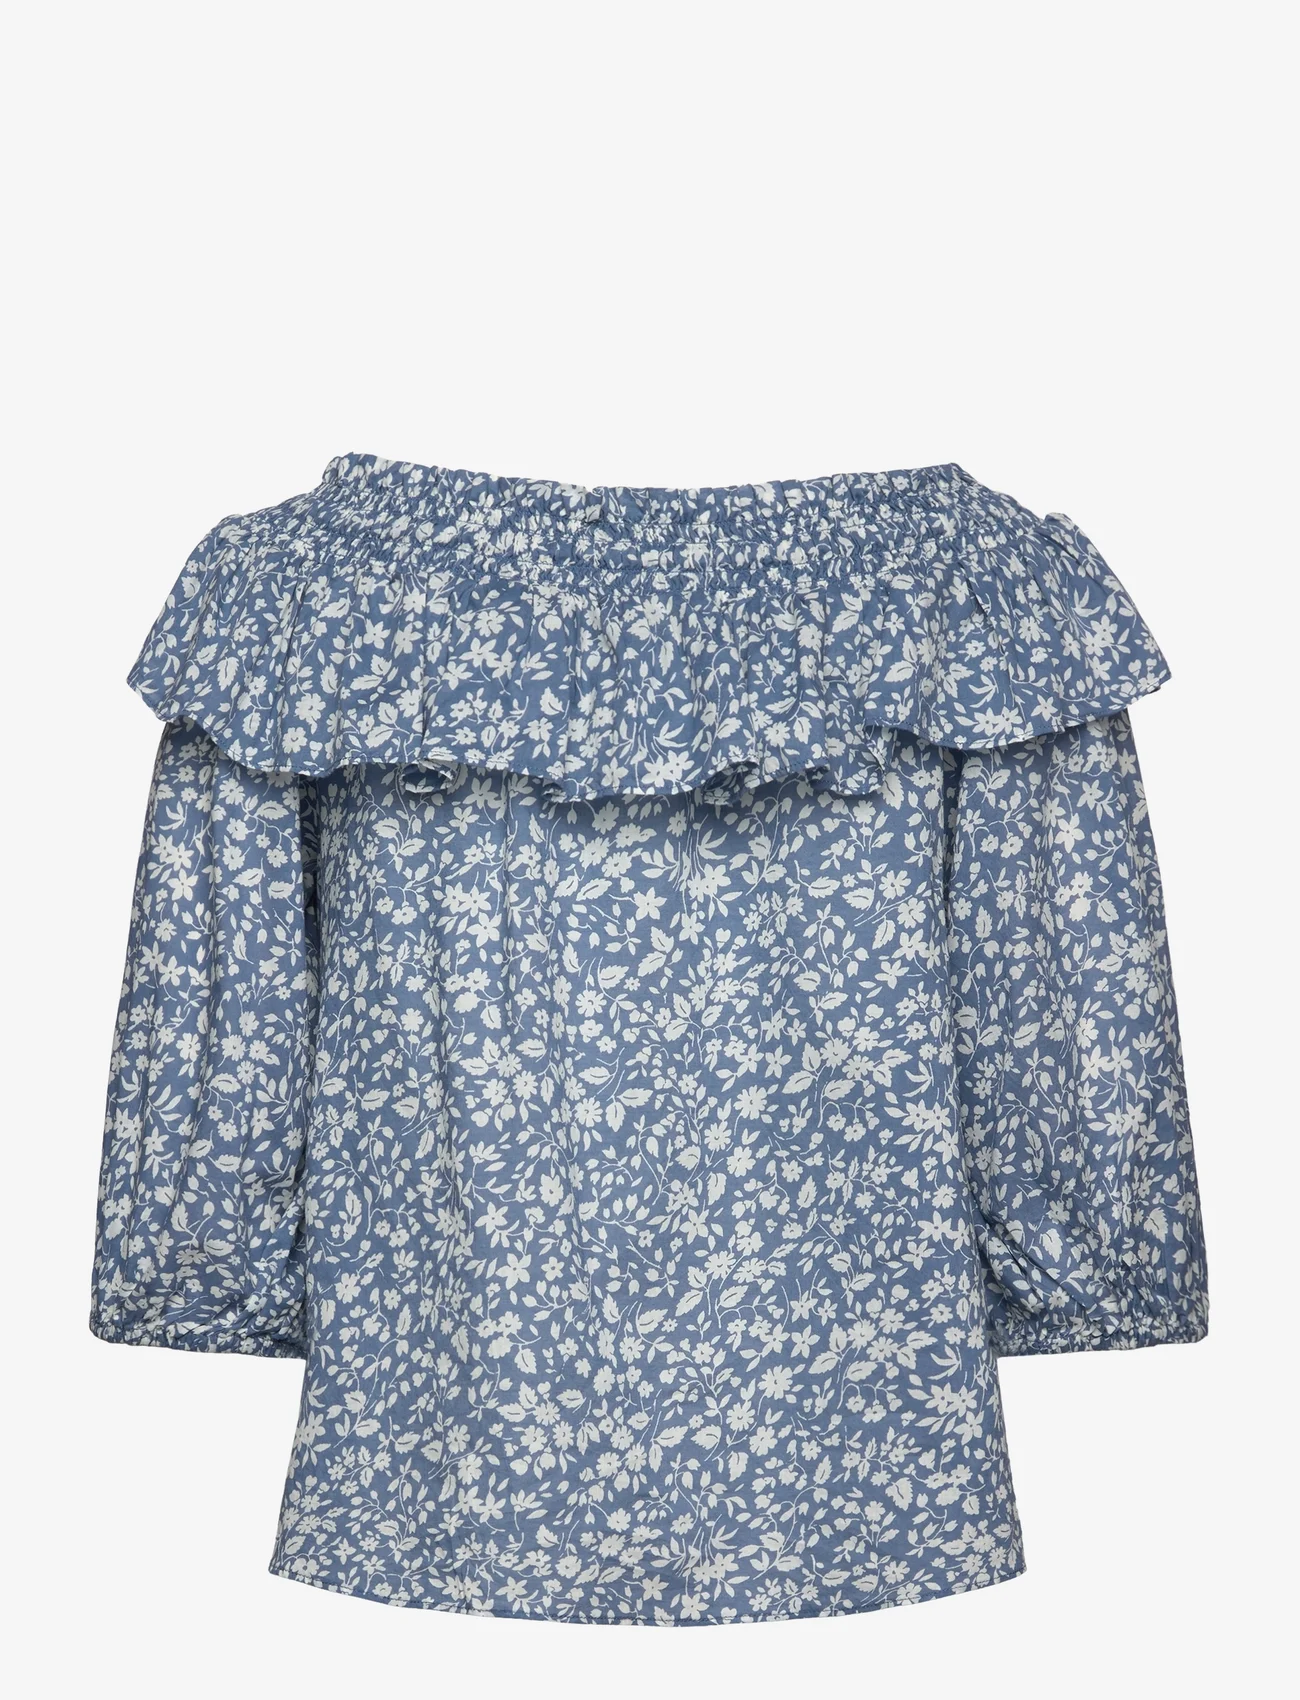 Lauren Ralph Lauren - Floral Voile Off-the-Shoulder Blouse - short-sleeved blouses - blue/cream - 1